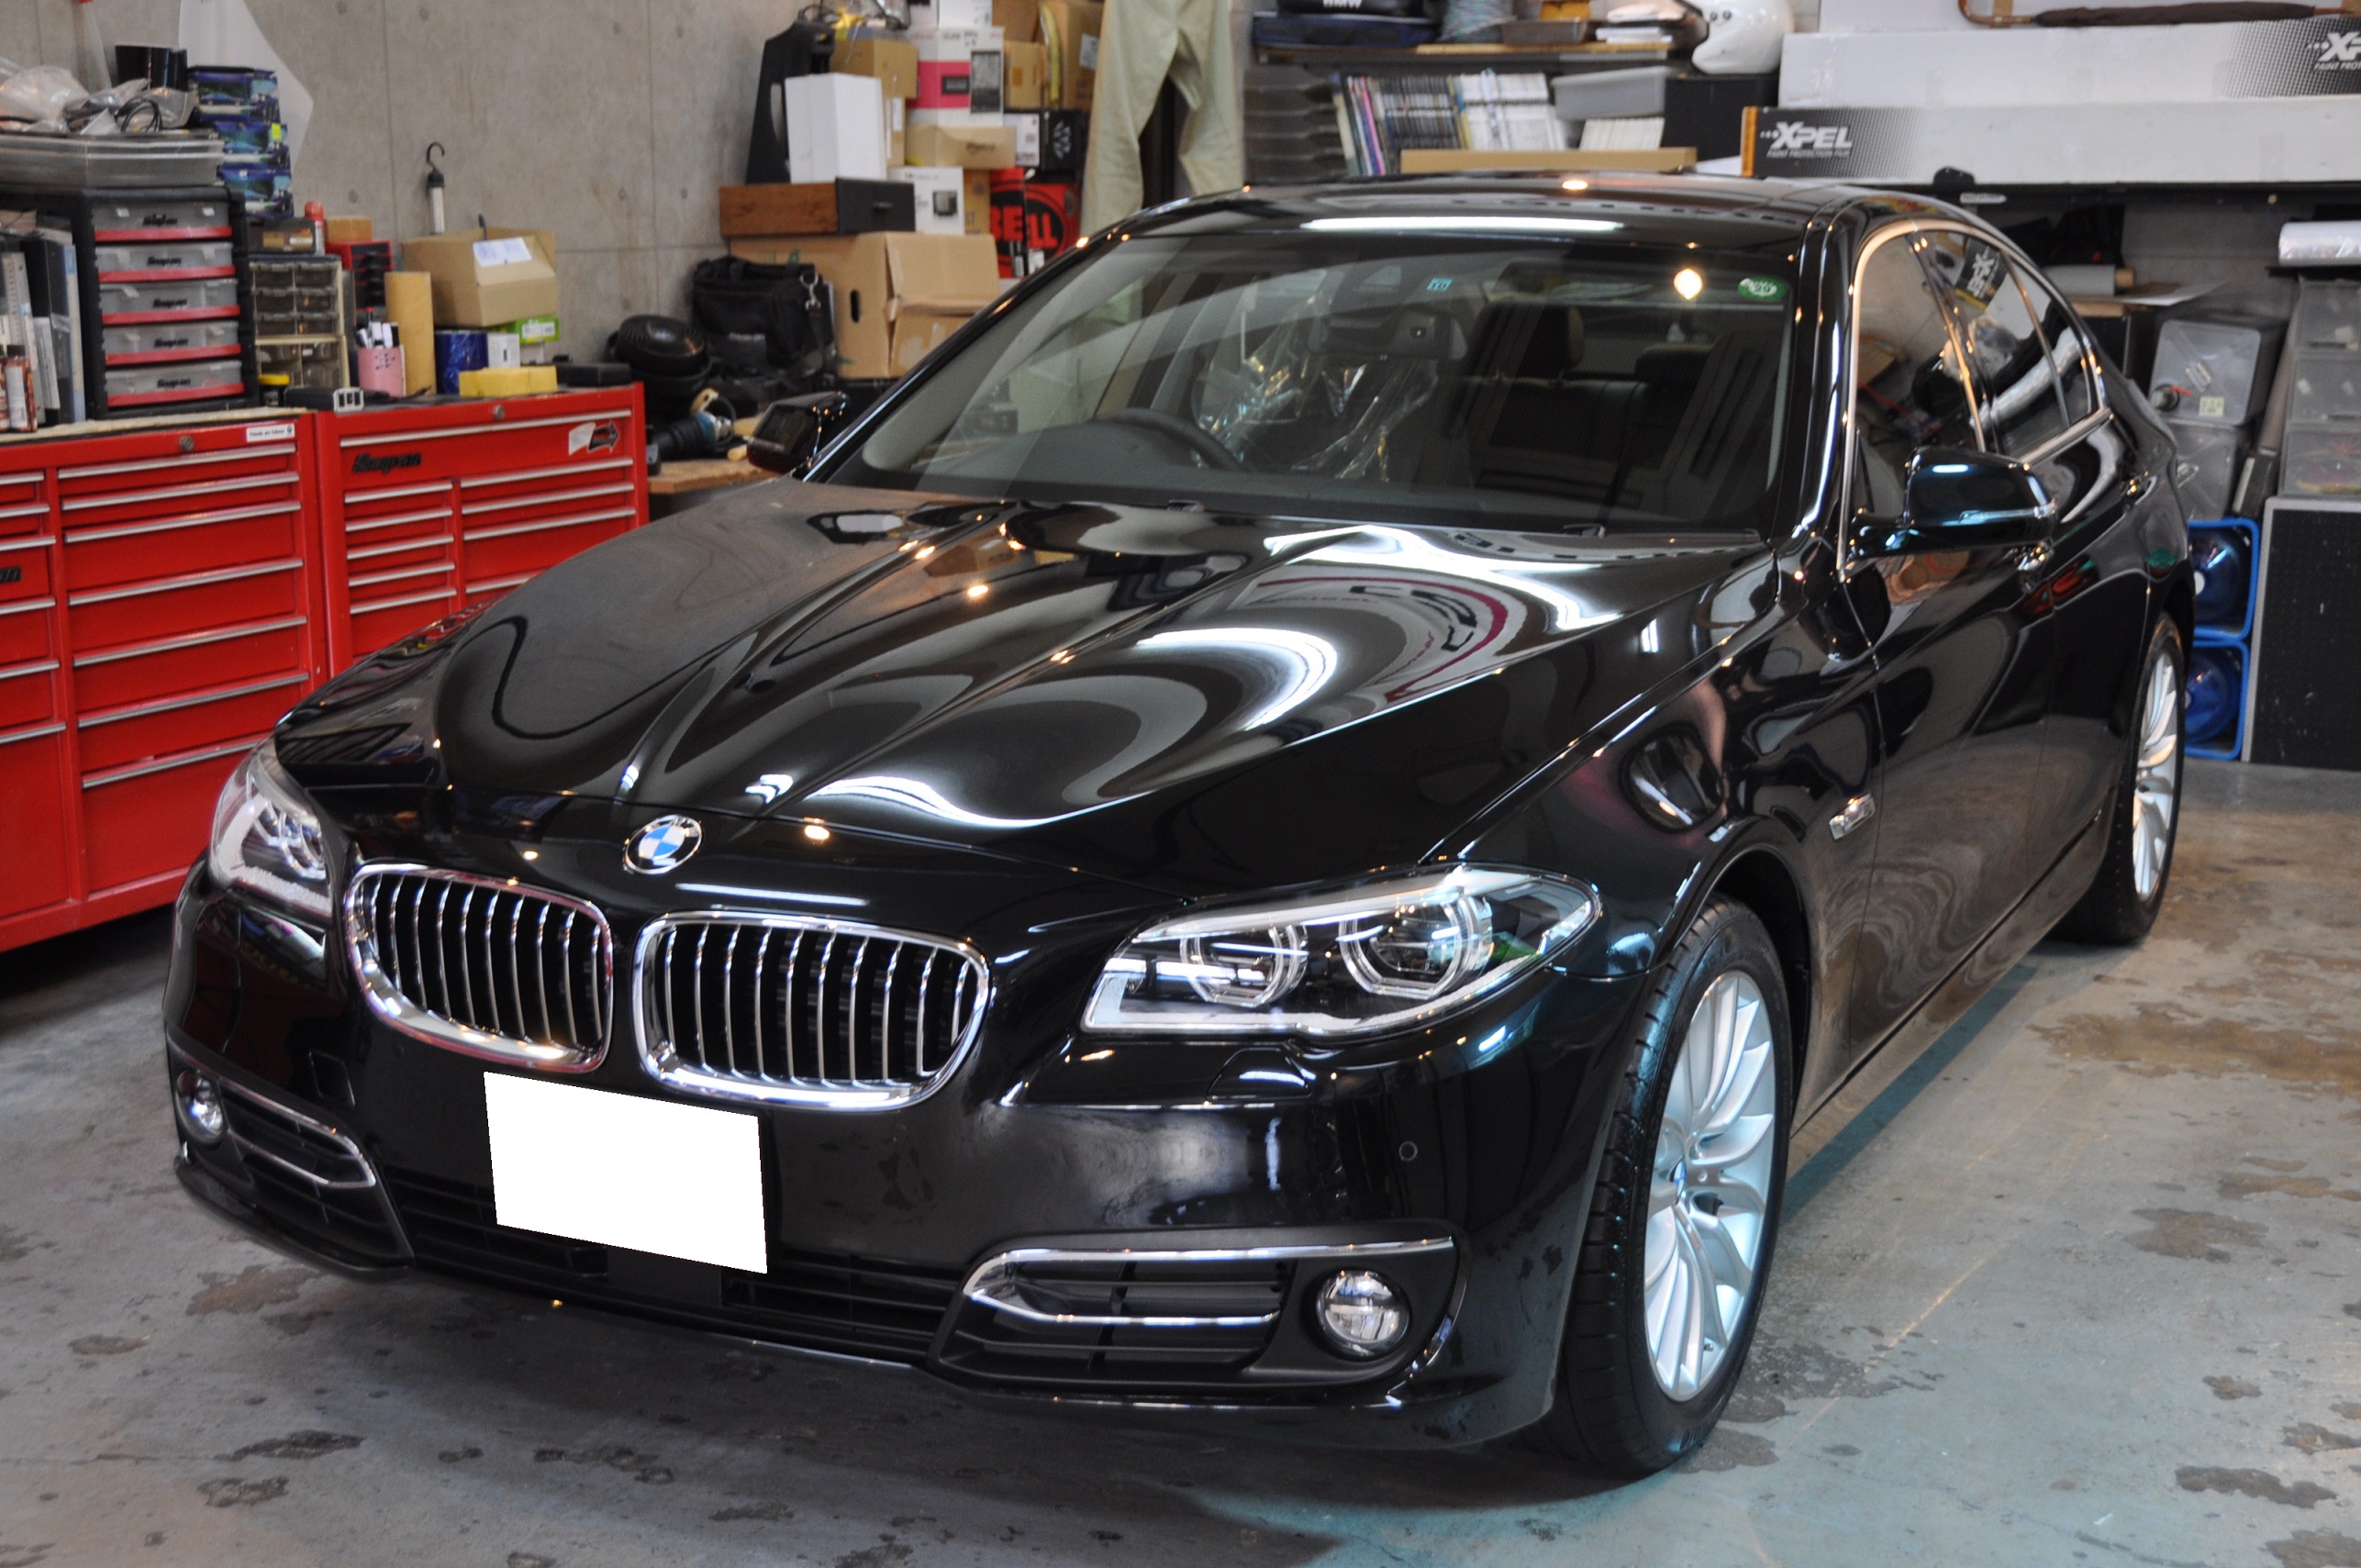 BMW F10 523i 5シリーズ エシュロンコーティング♪ Damcraft Official Blog